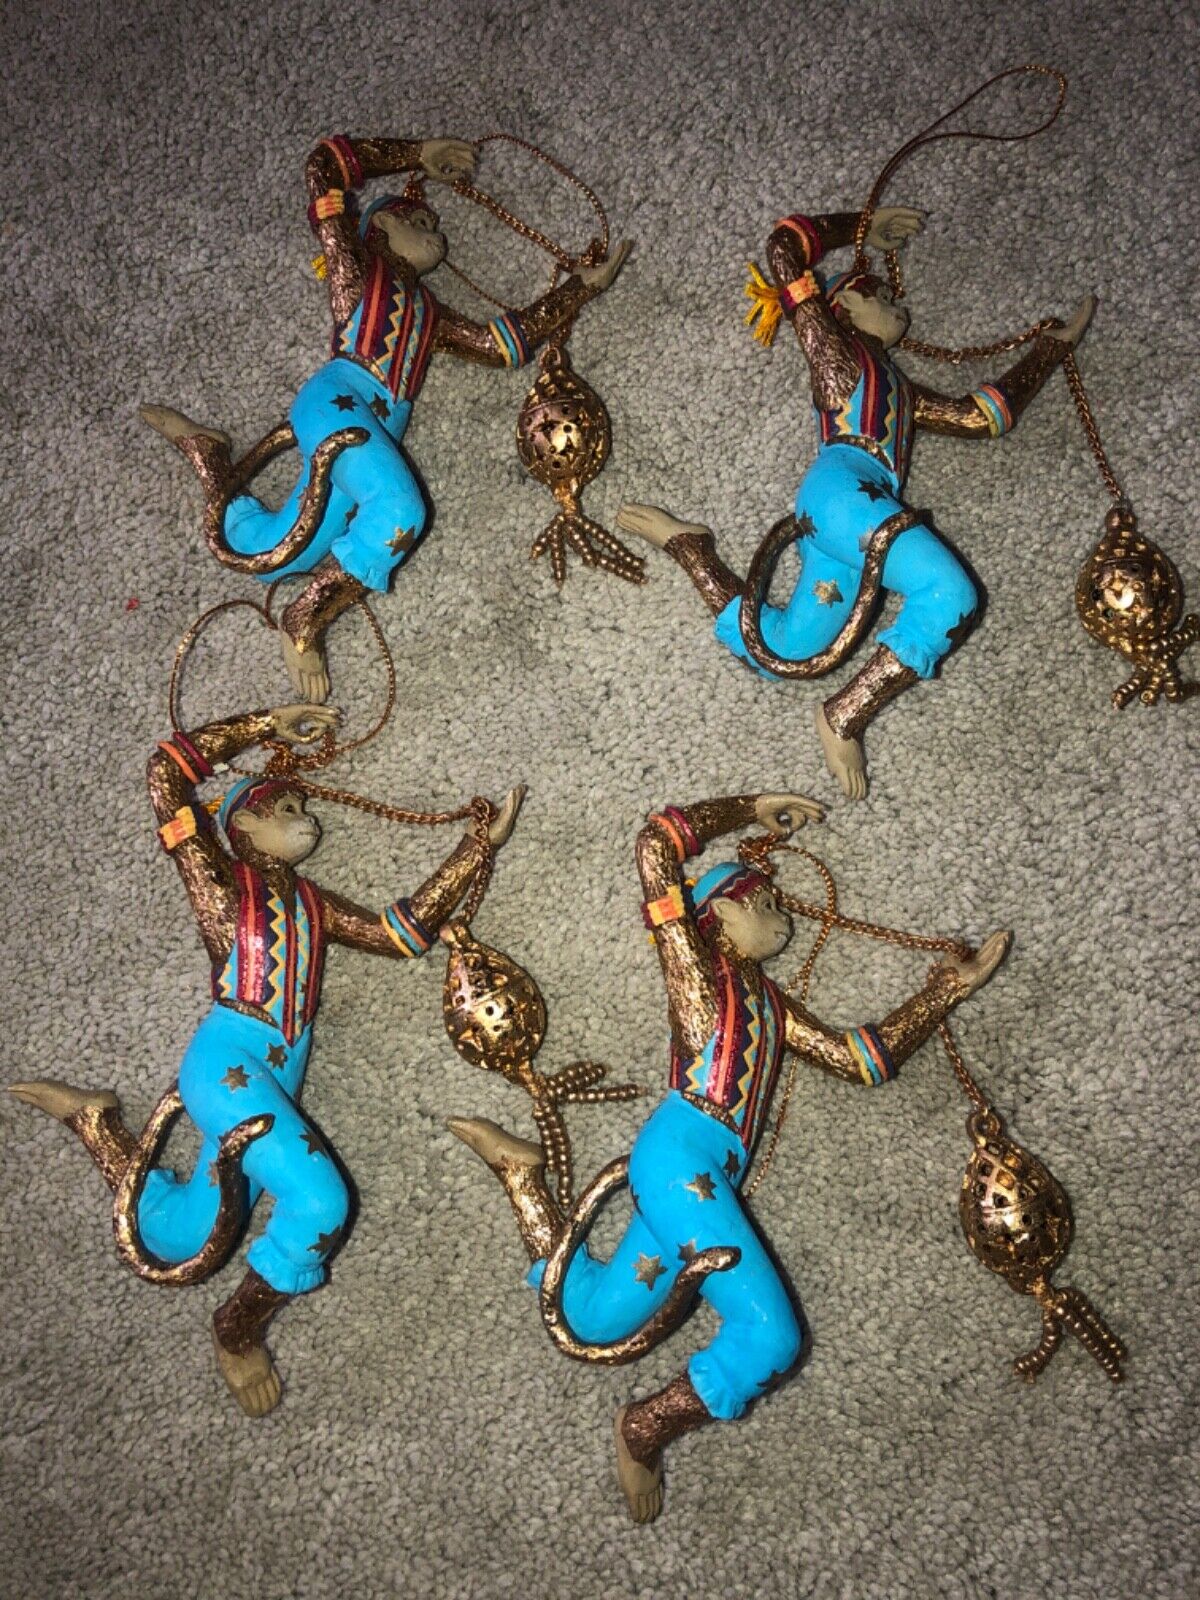 Vintage Monkey Christmas Ornaments Lot (4) Turquoise, gold color￼